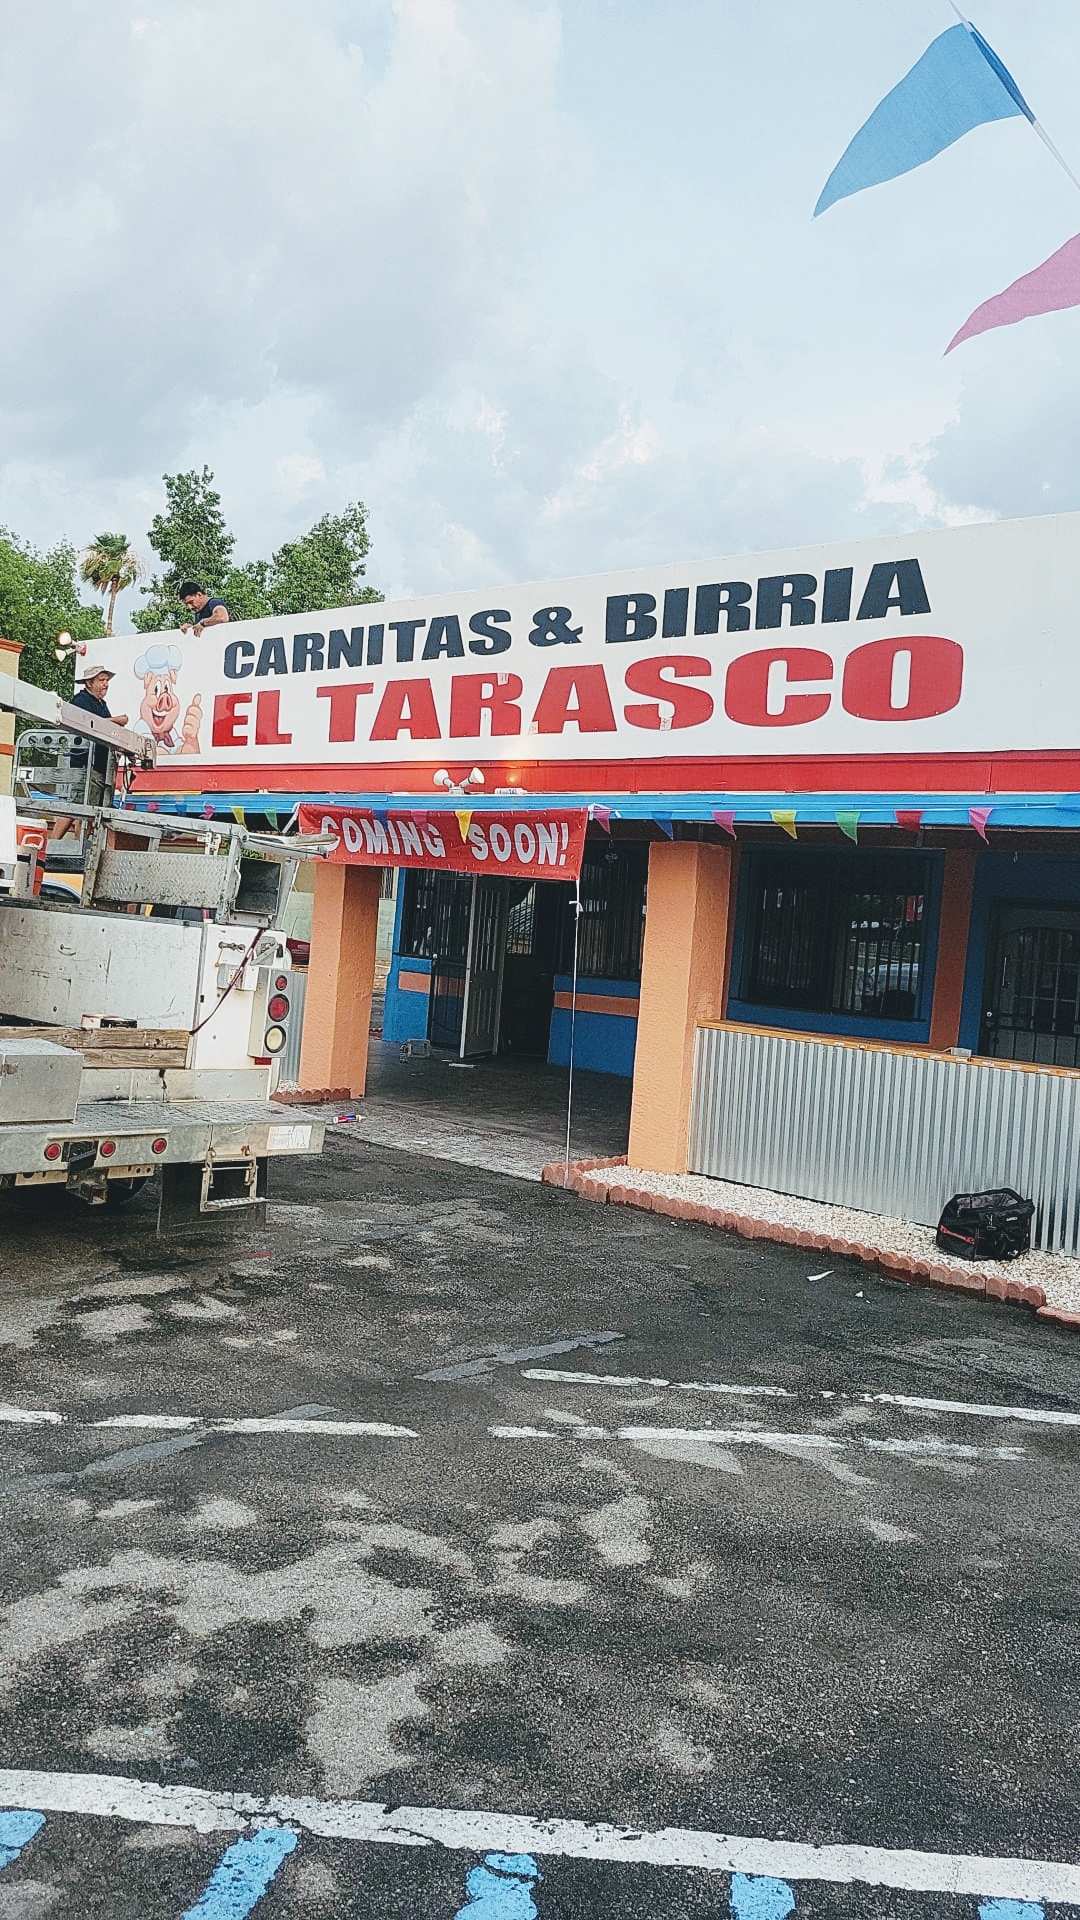 Carnitas & Birria El Tarasco